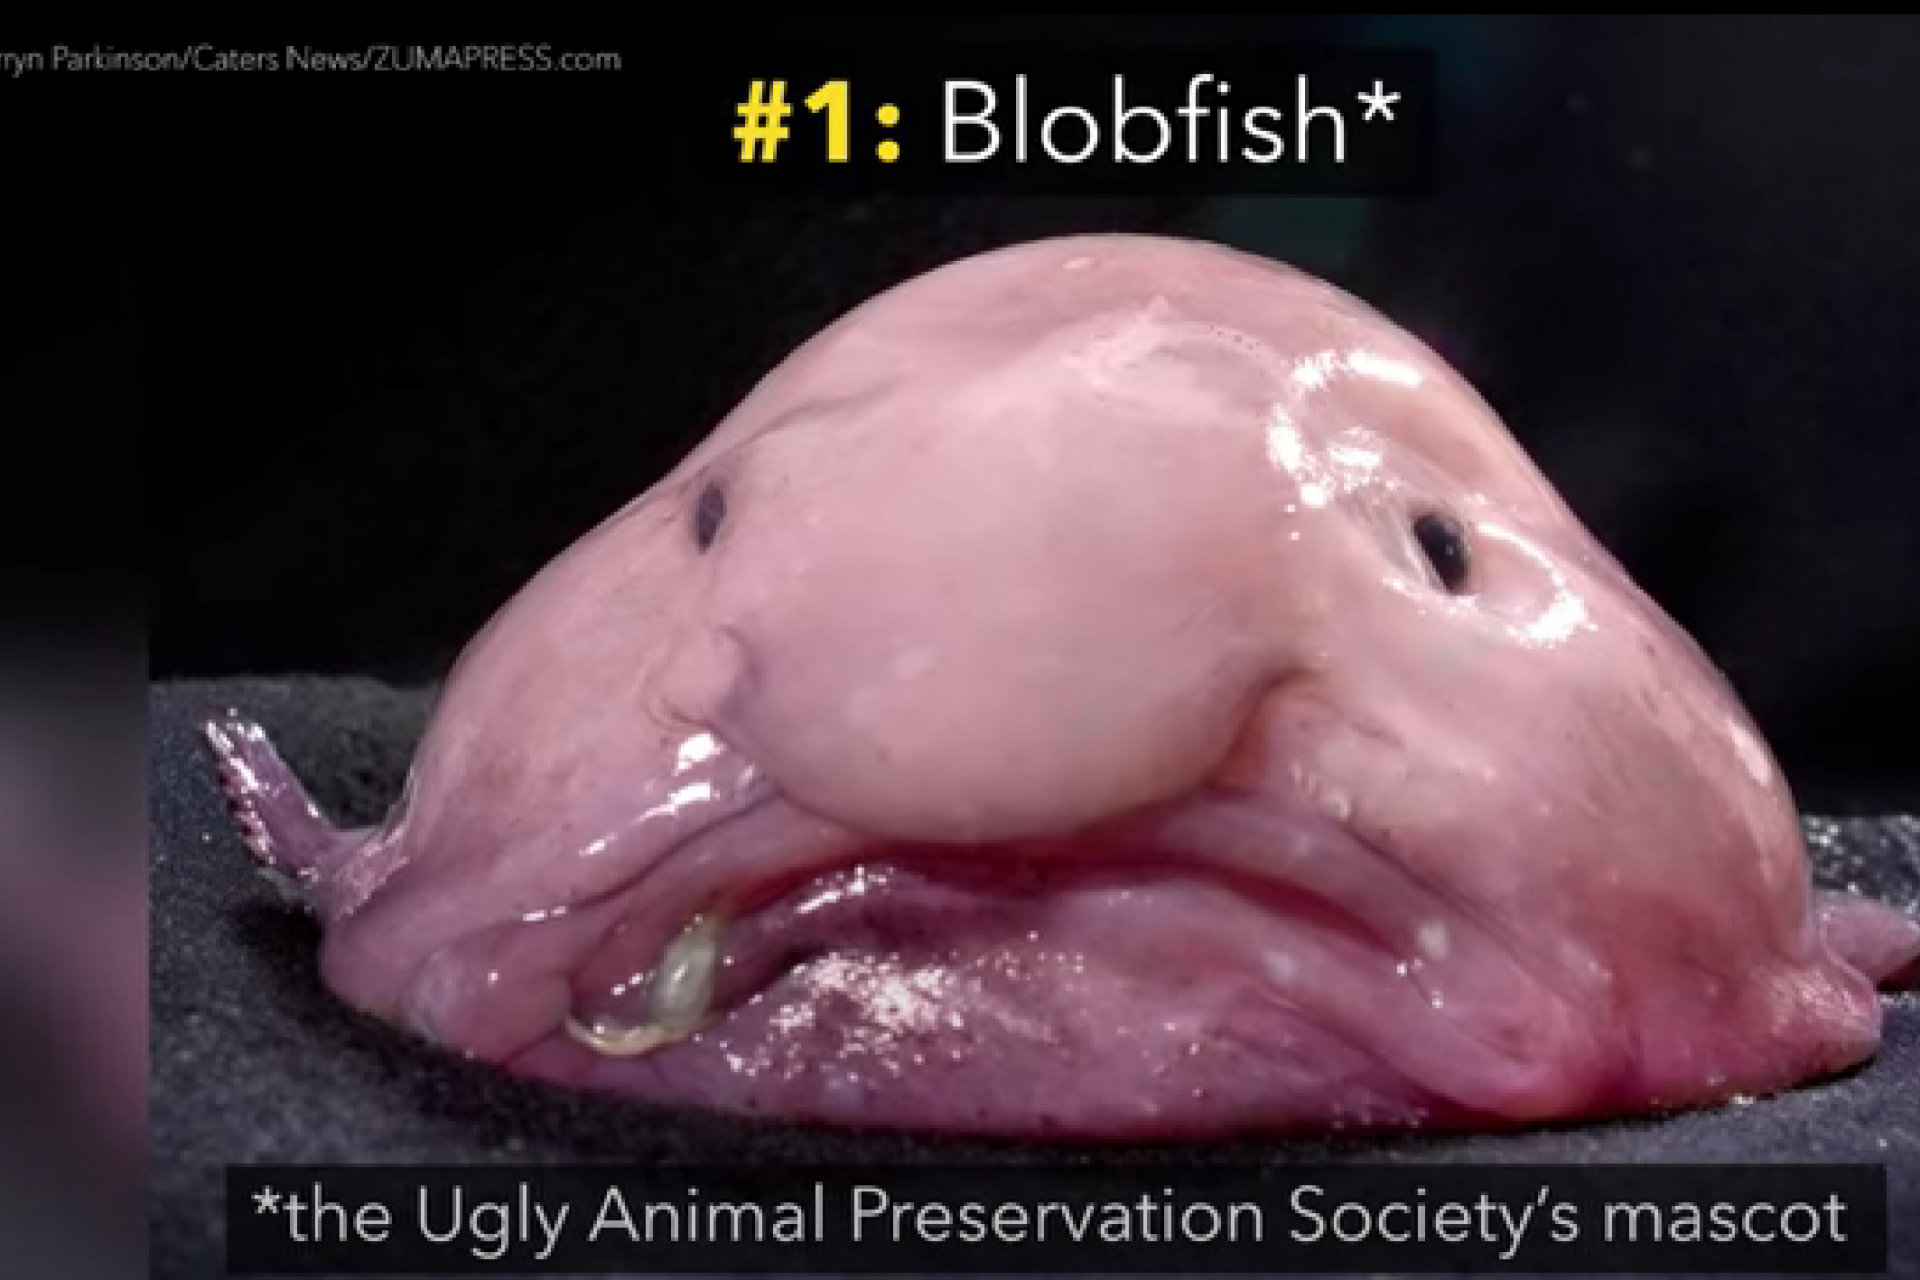 Le blobfish